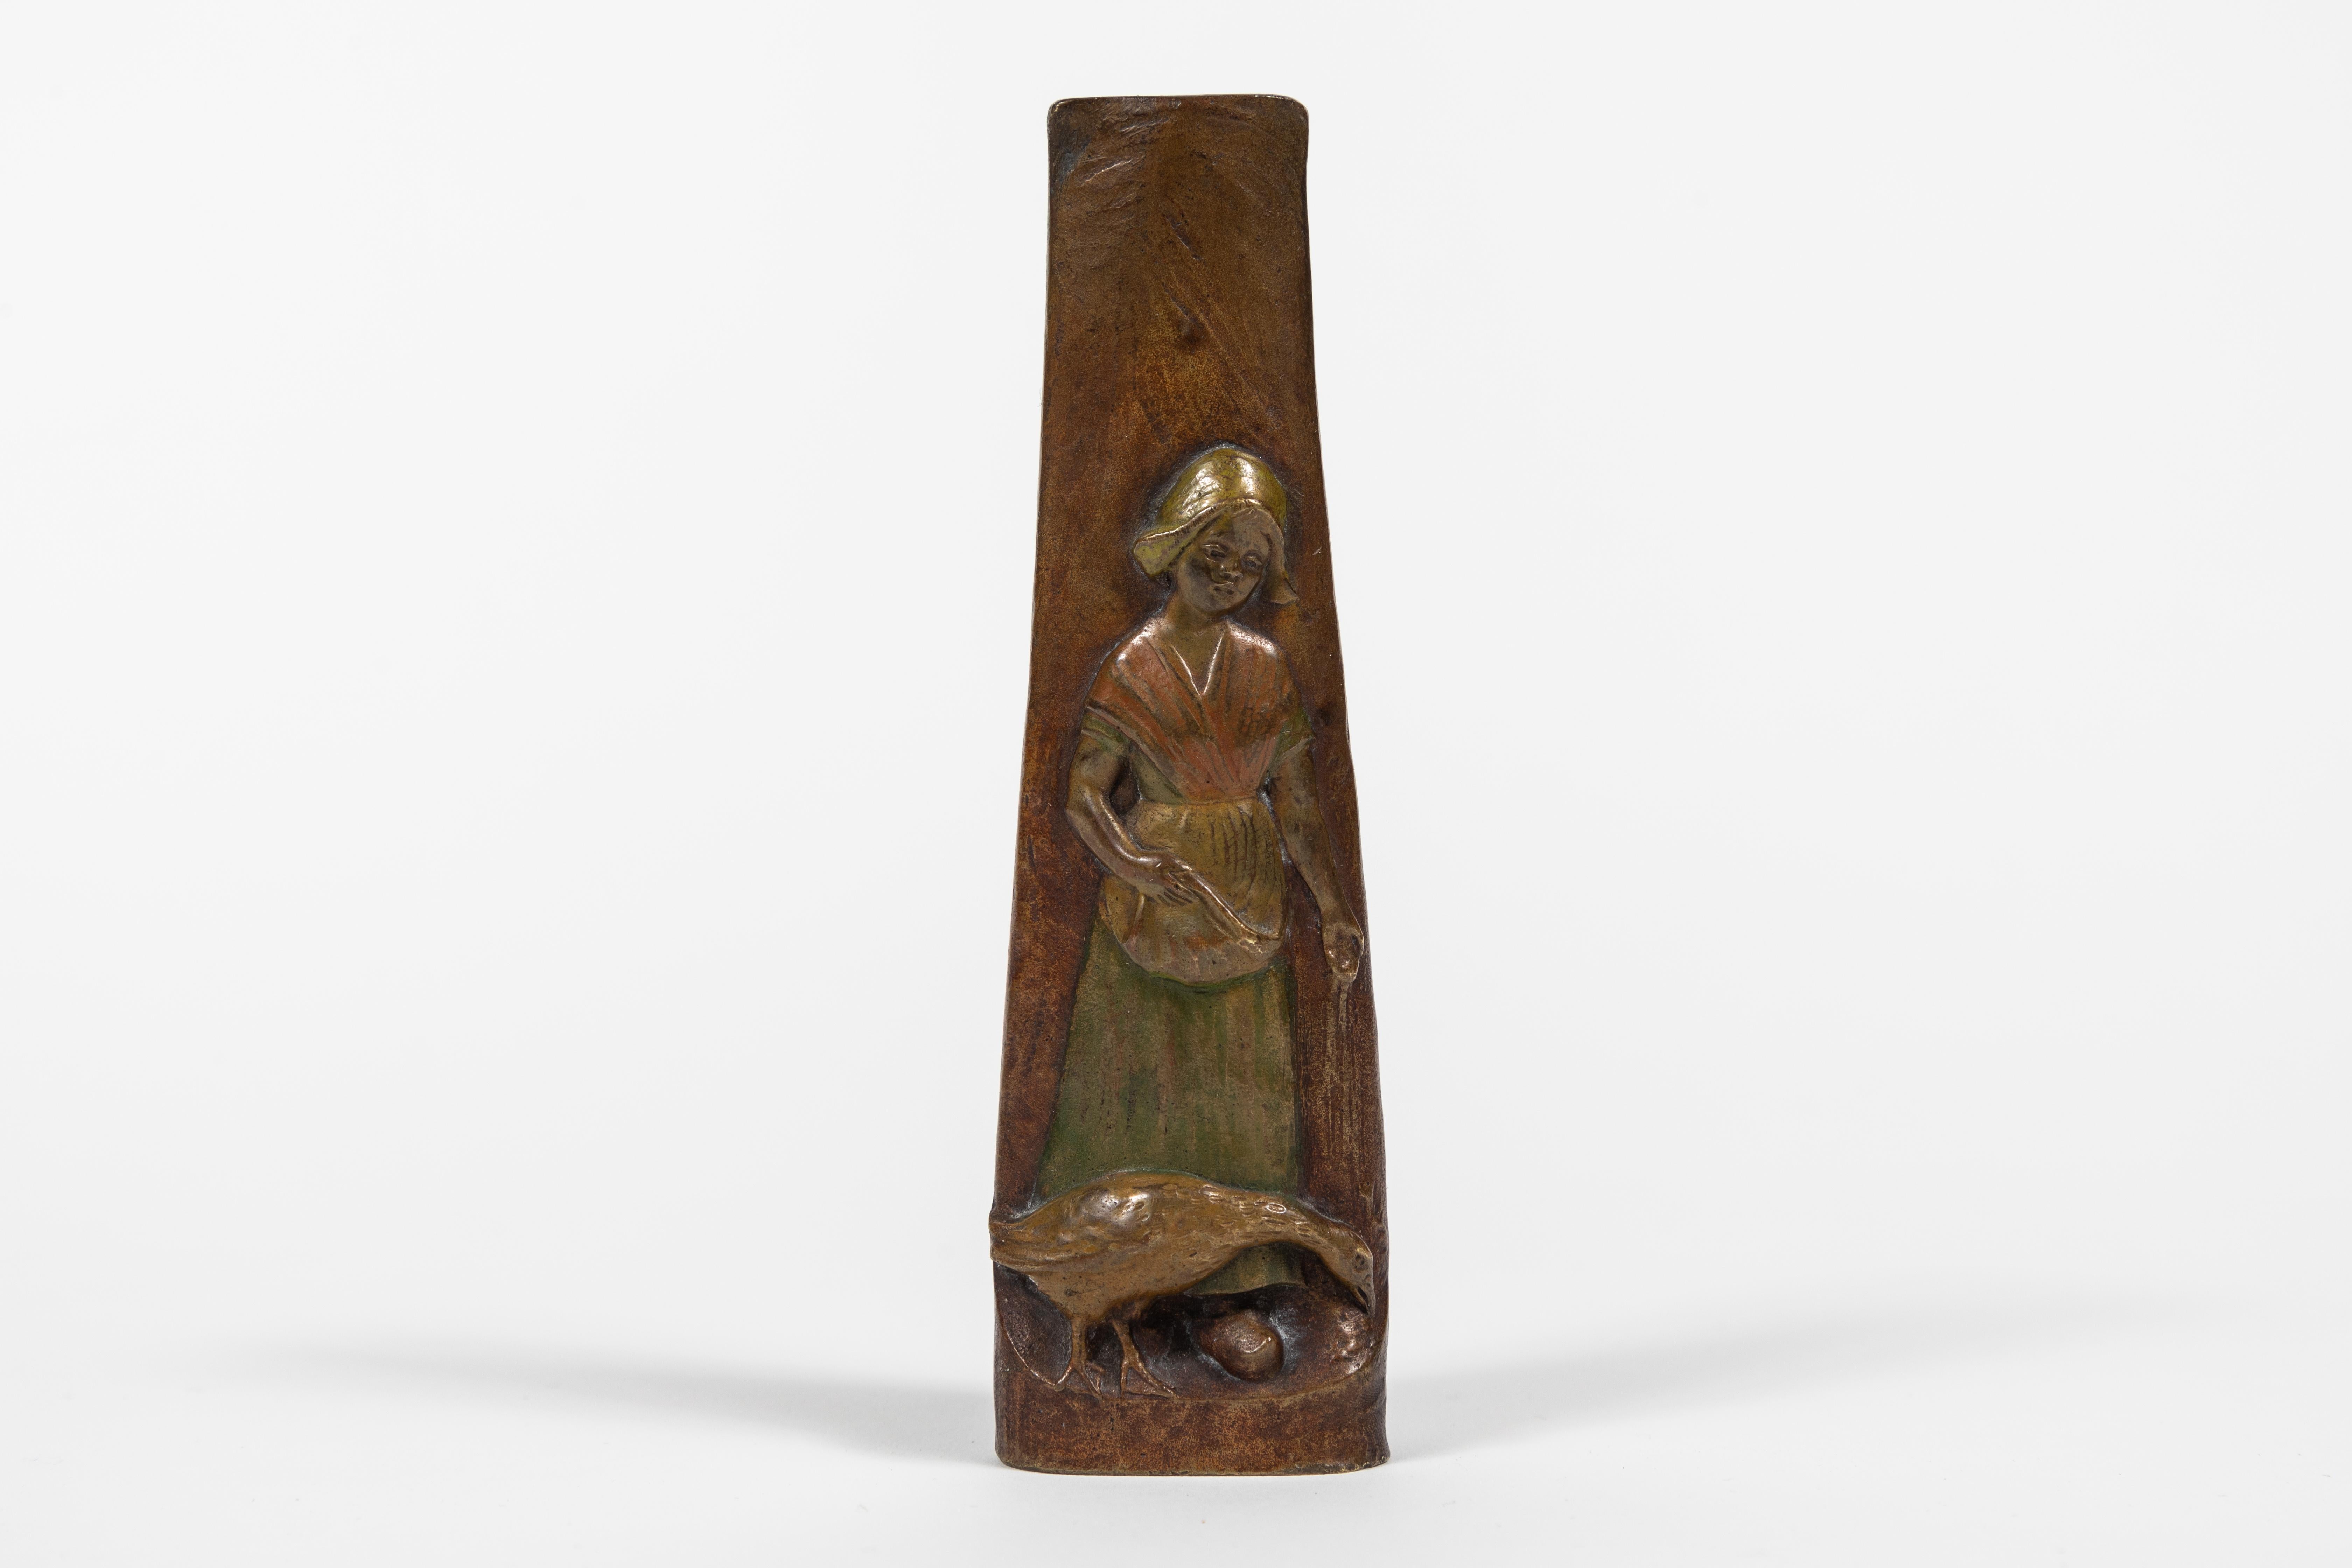 Small bronze vase depicting “Goose Girl”, 19th century. German fairy-tale.